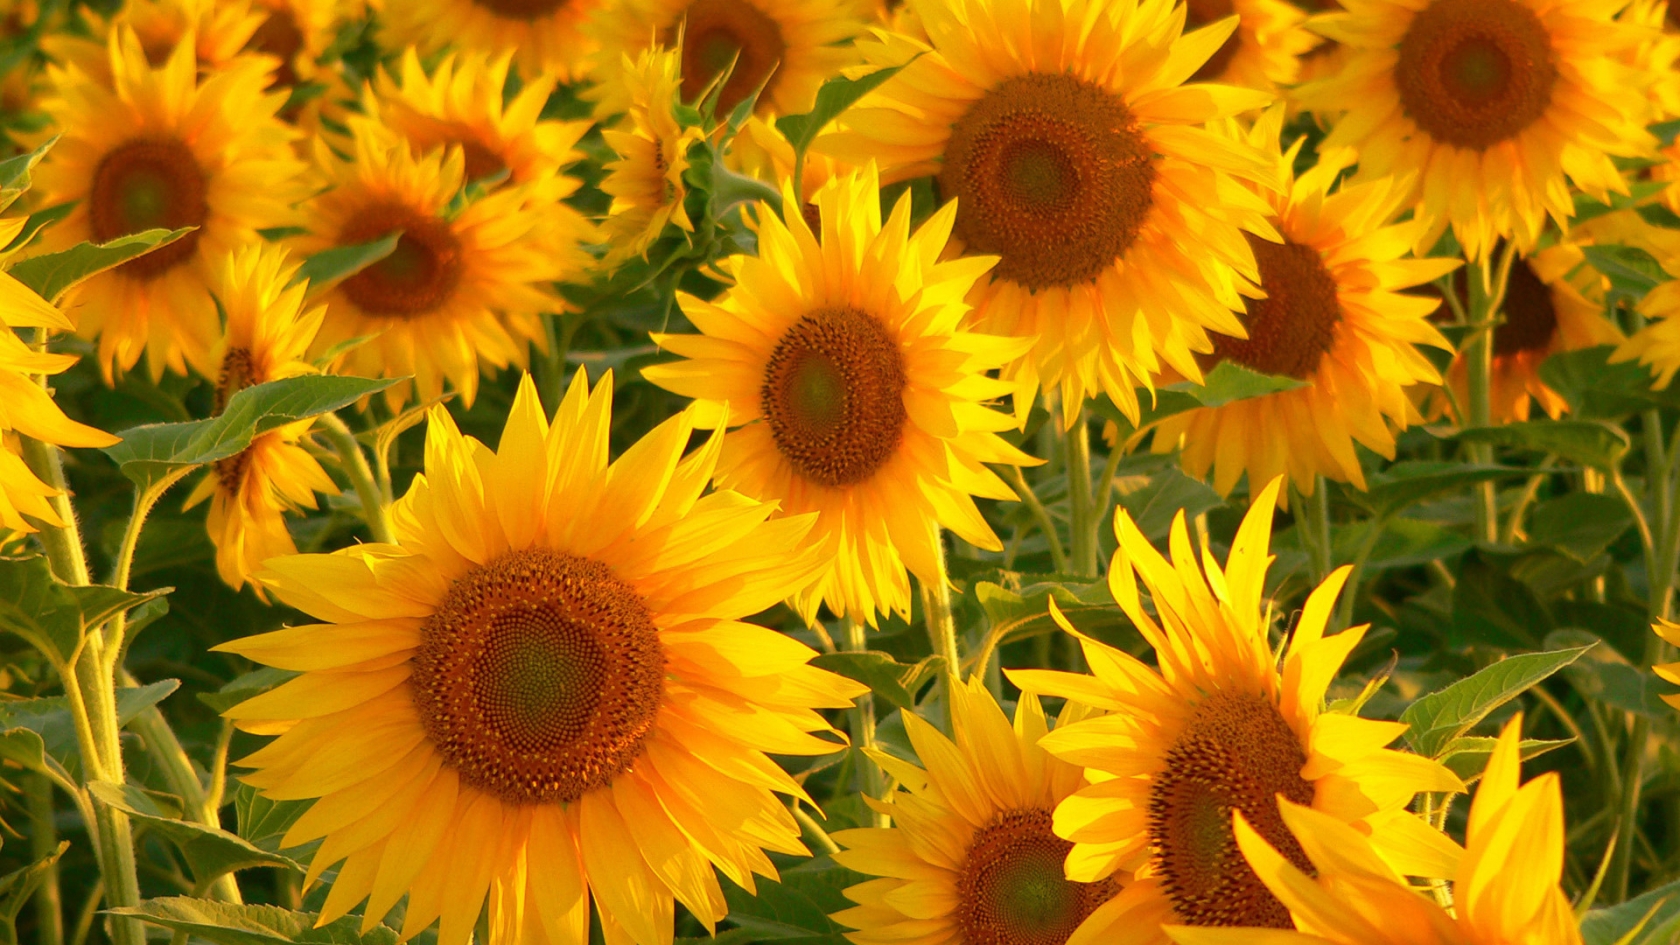 Sunflowers for 1680 x 945 HDTV resolution